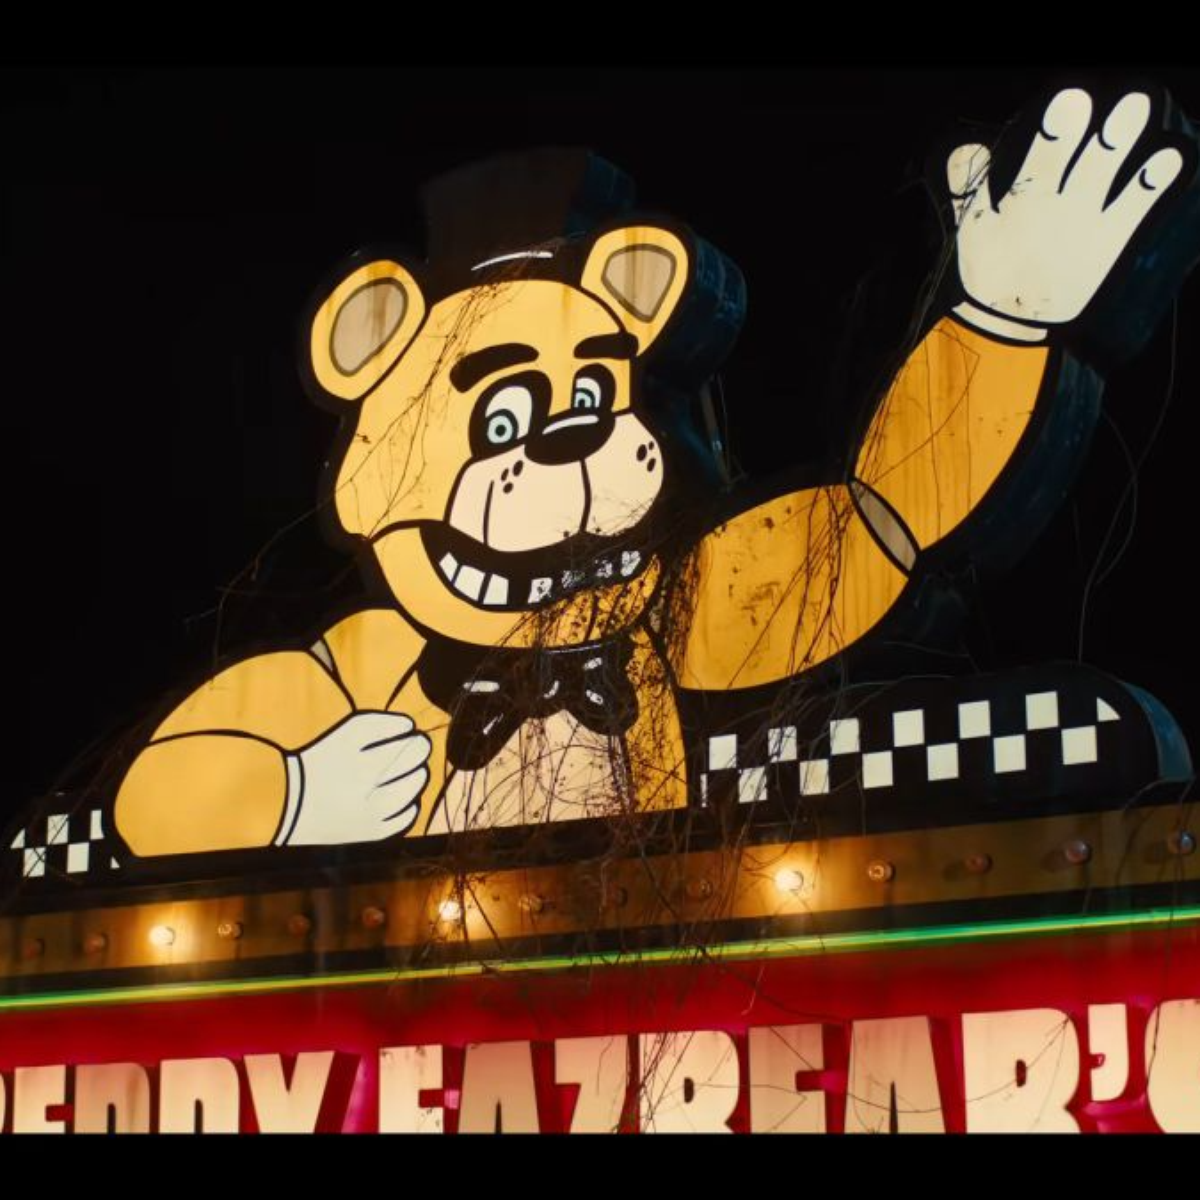 Filme de Five Nights at Freddy's ganha trailer; assista